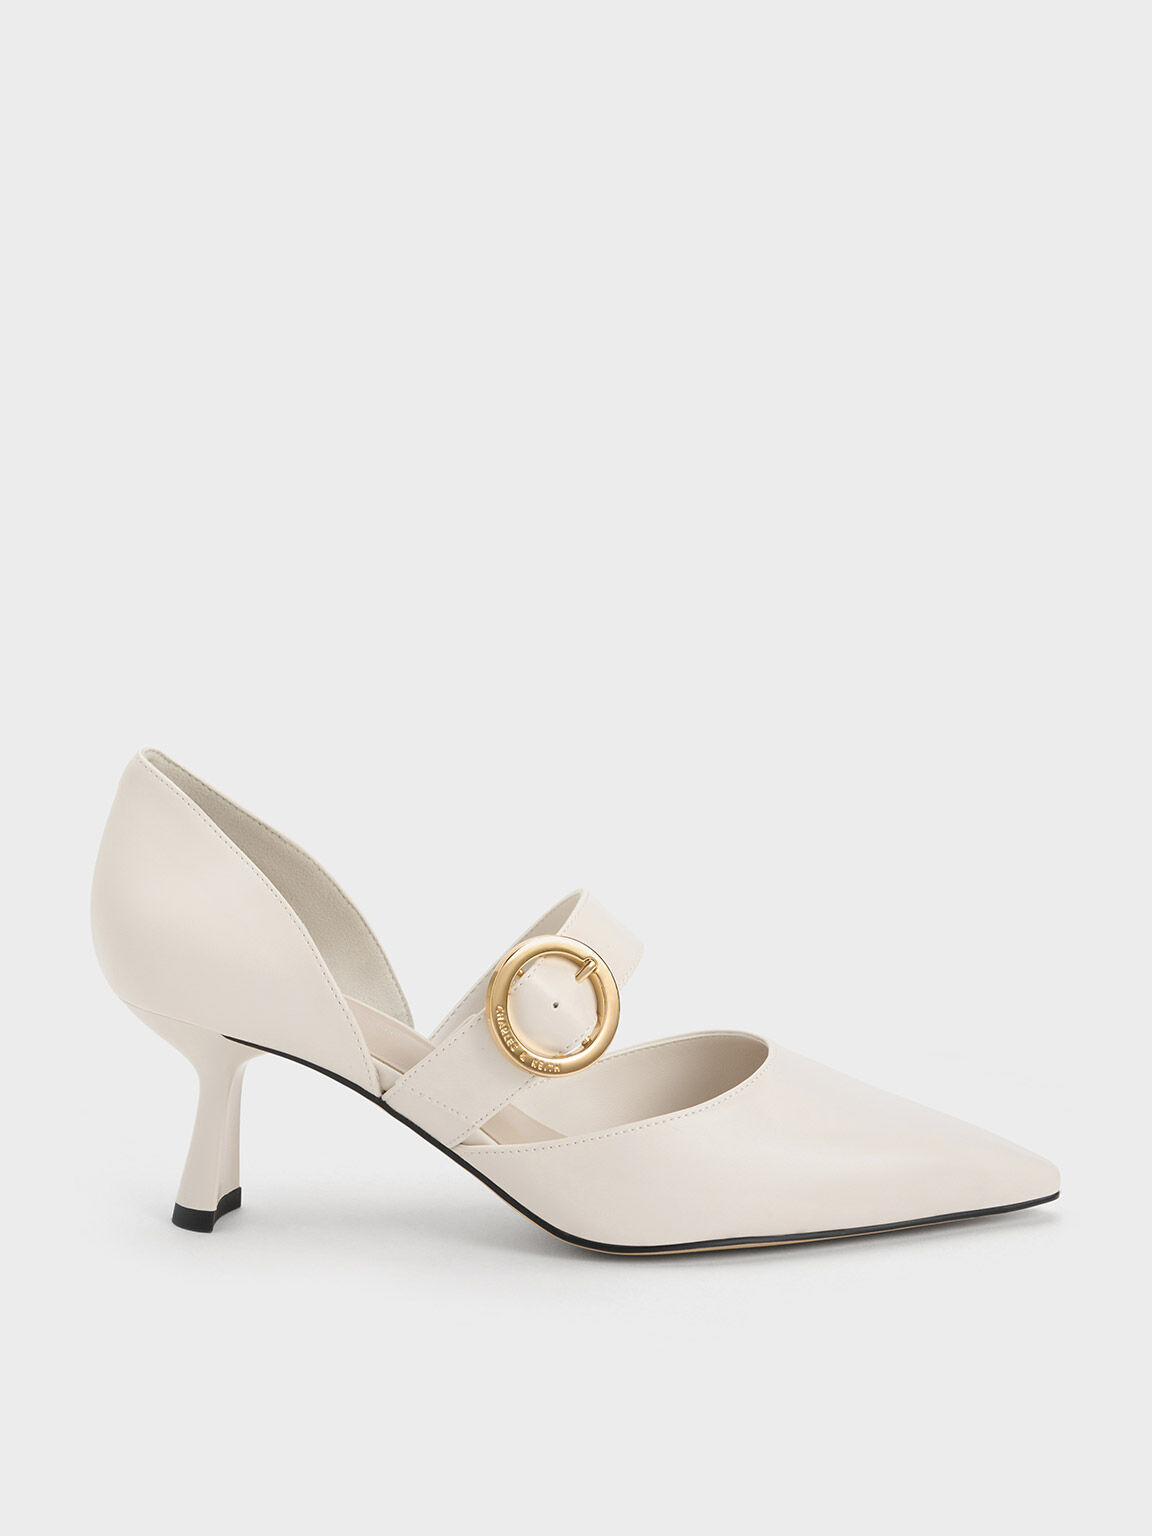 Zapatos de Tacón D'Orsay con Hebilla, White, hi-res